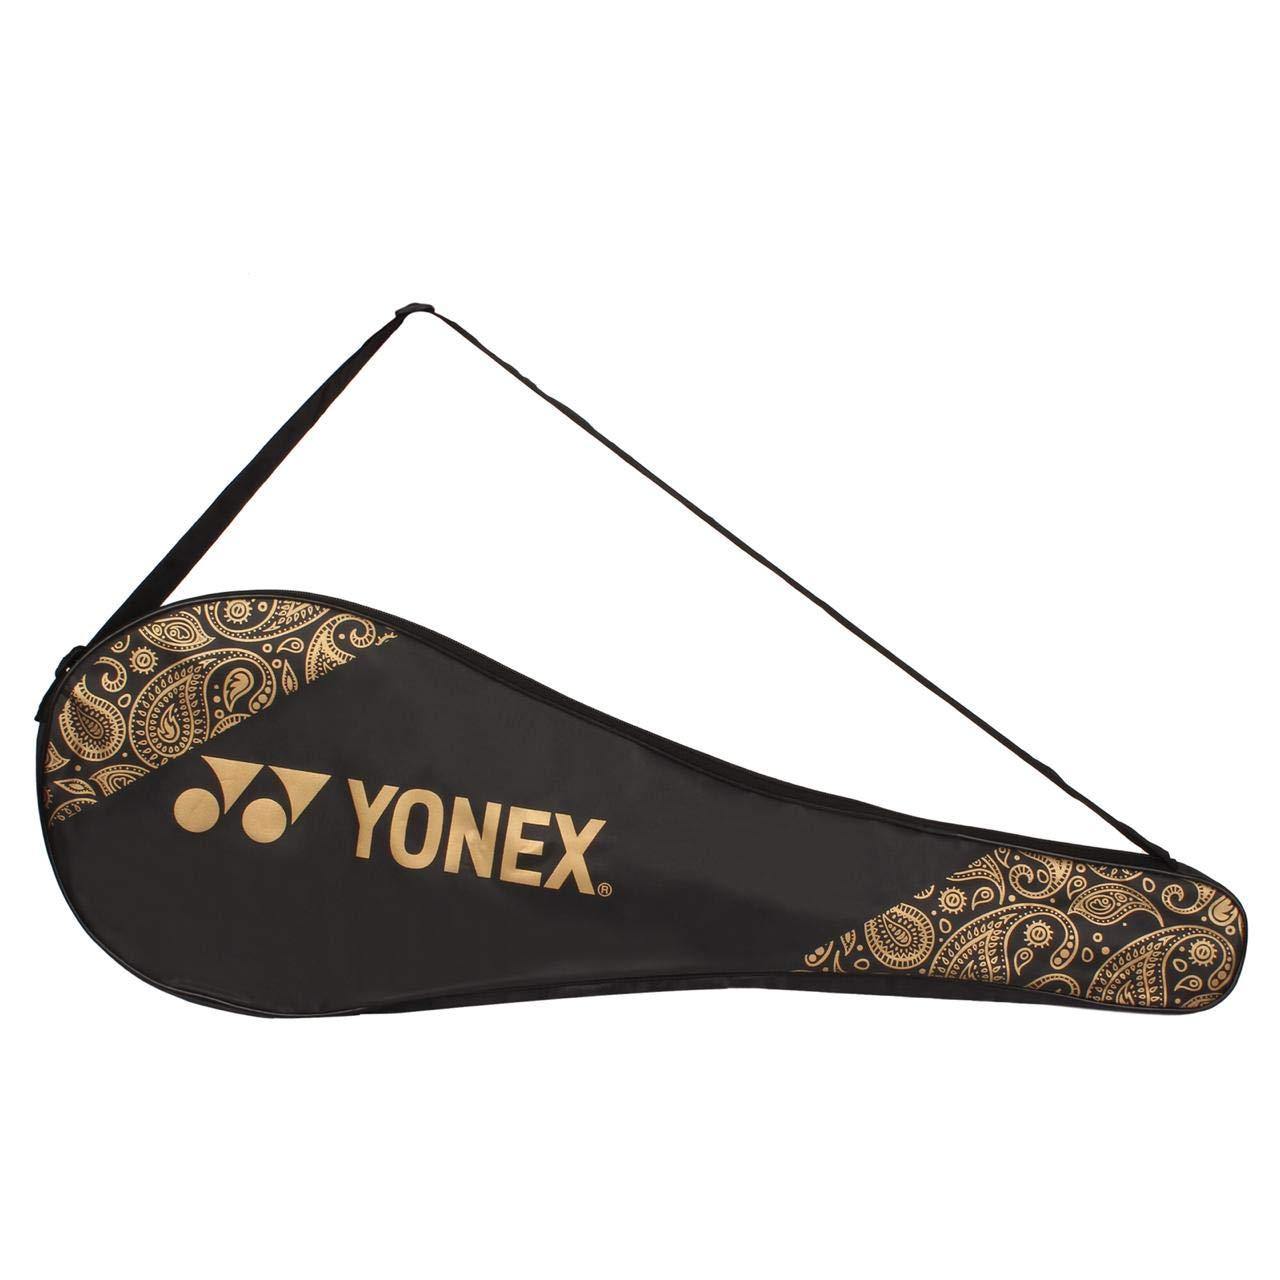 Yonex ZR 111 Light Strung Badminton Racquet, Grey (Full Cover) - Set of 2 Racquets - Best Price online Prokicksports.com